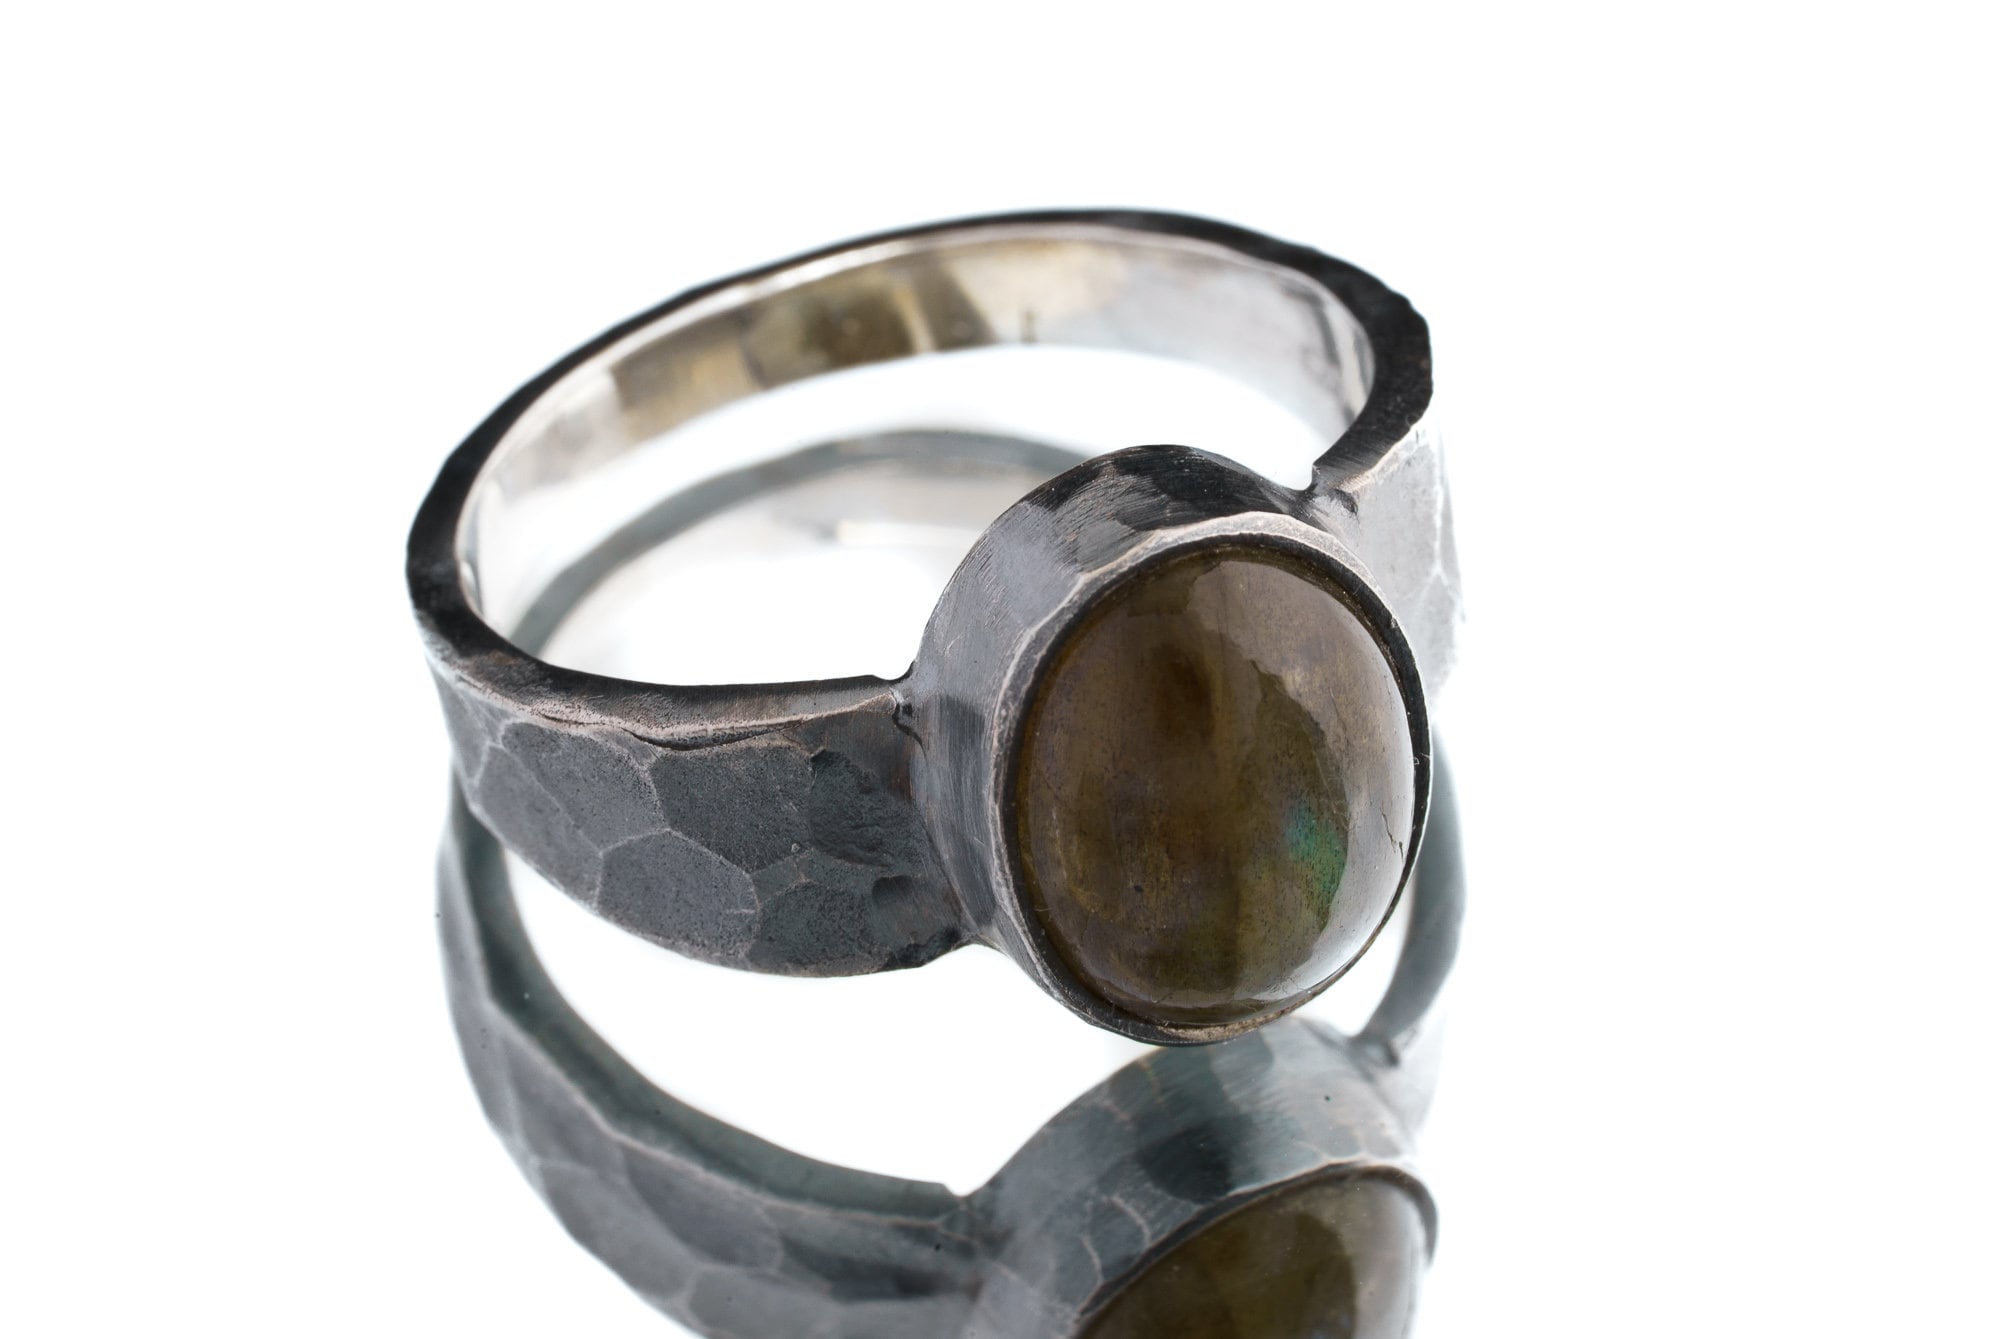 Labradorite Cabochon - Unisex / Men - Large Crystal Ring - Size 11 US - 925 Sterling Silver - Hammer Textured & Oxidised